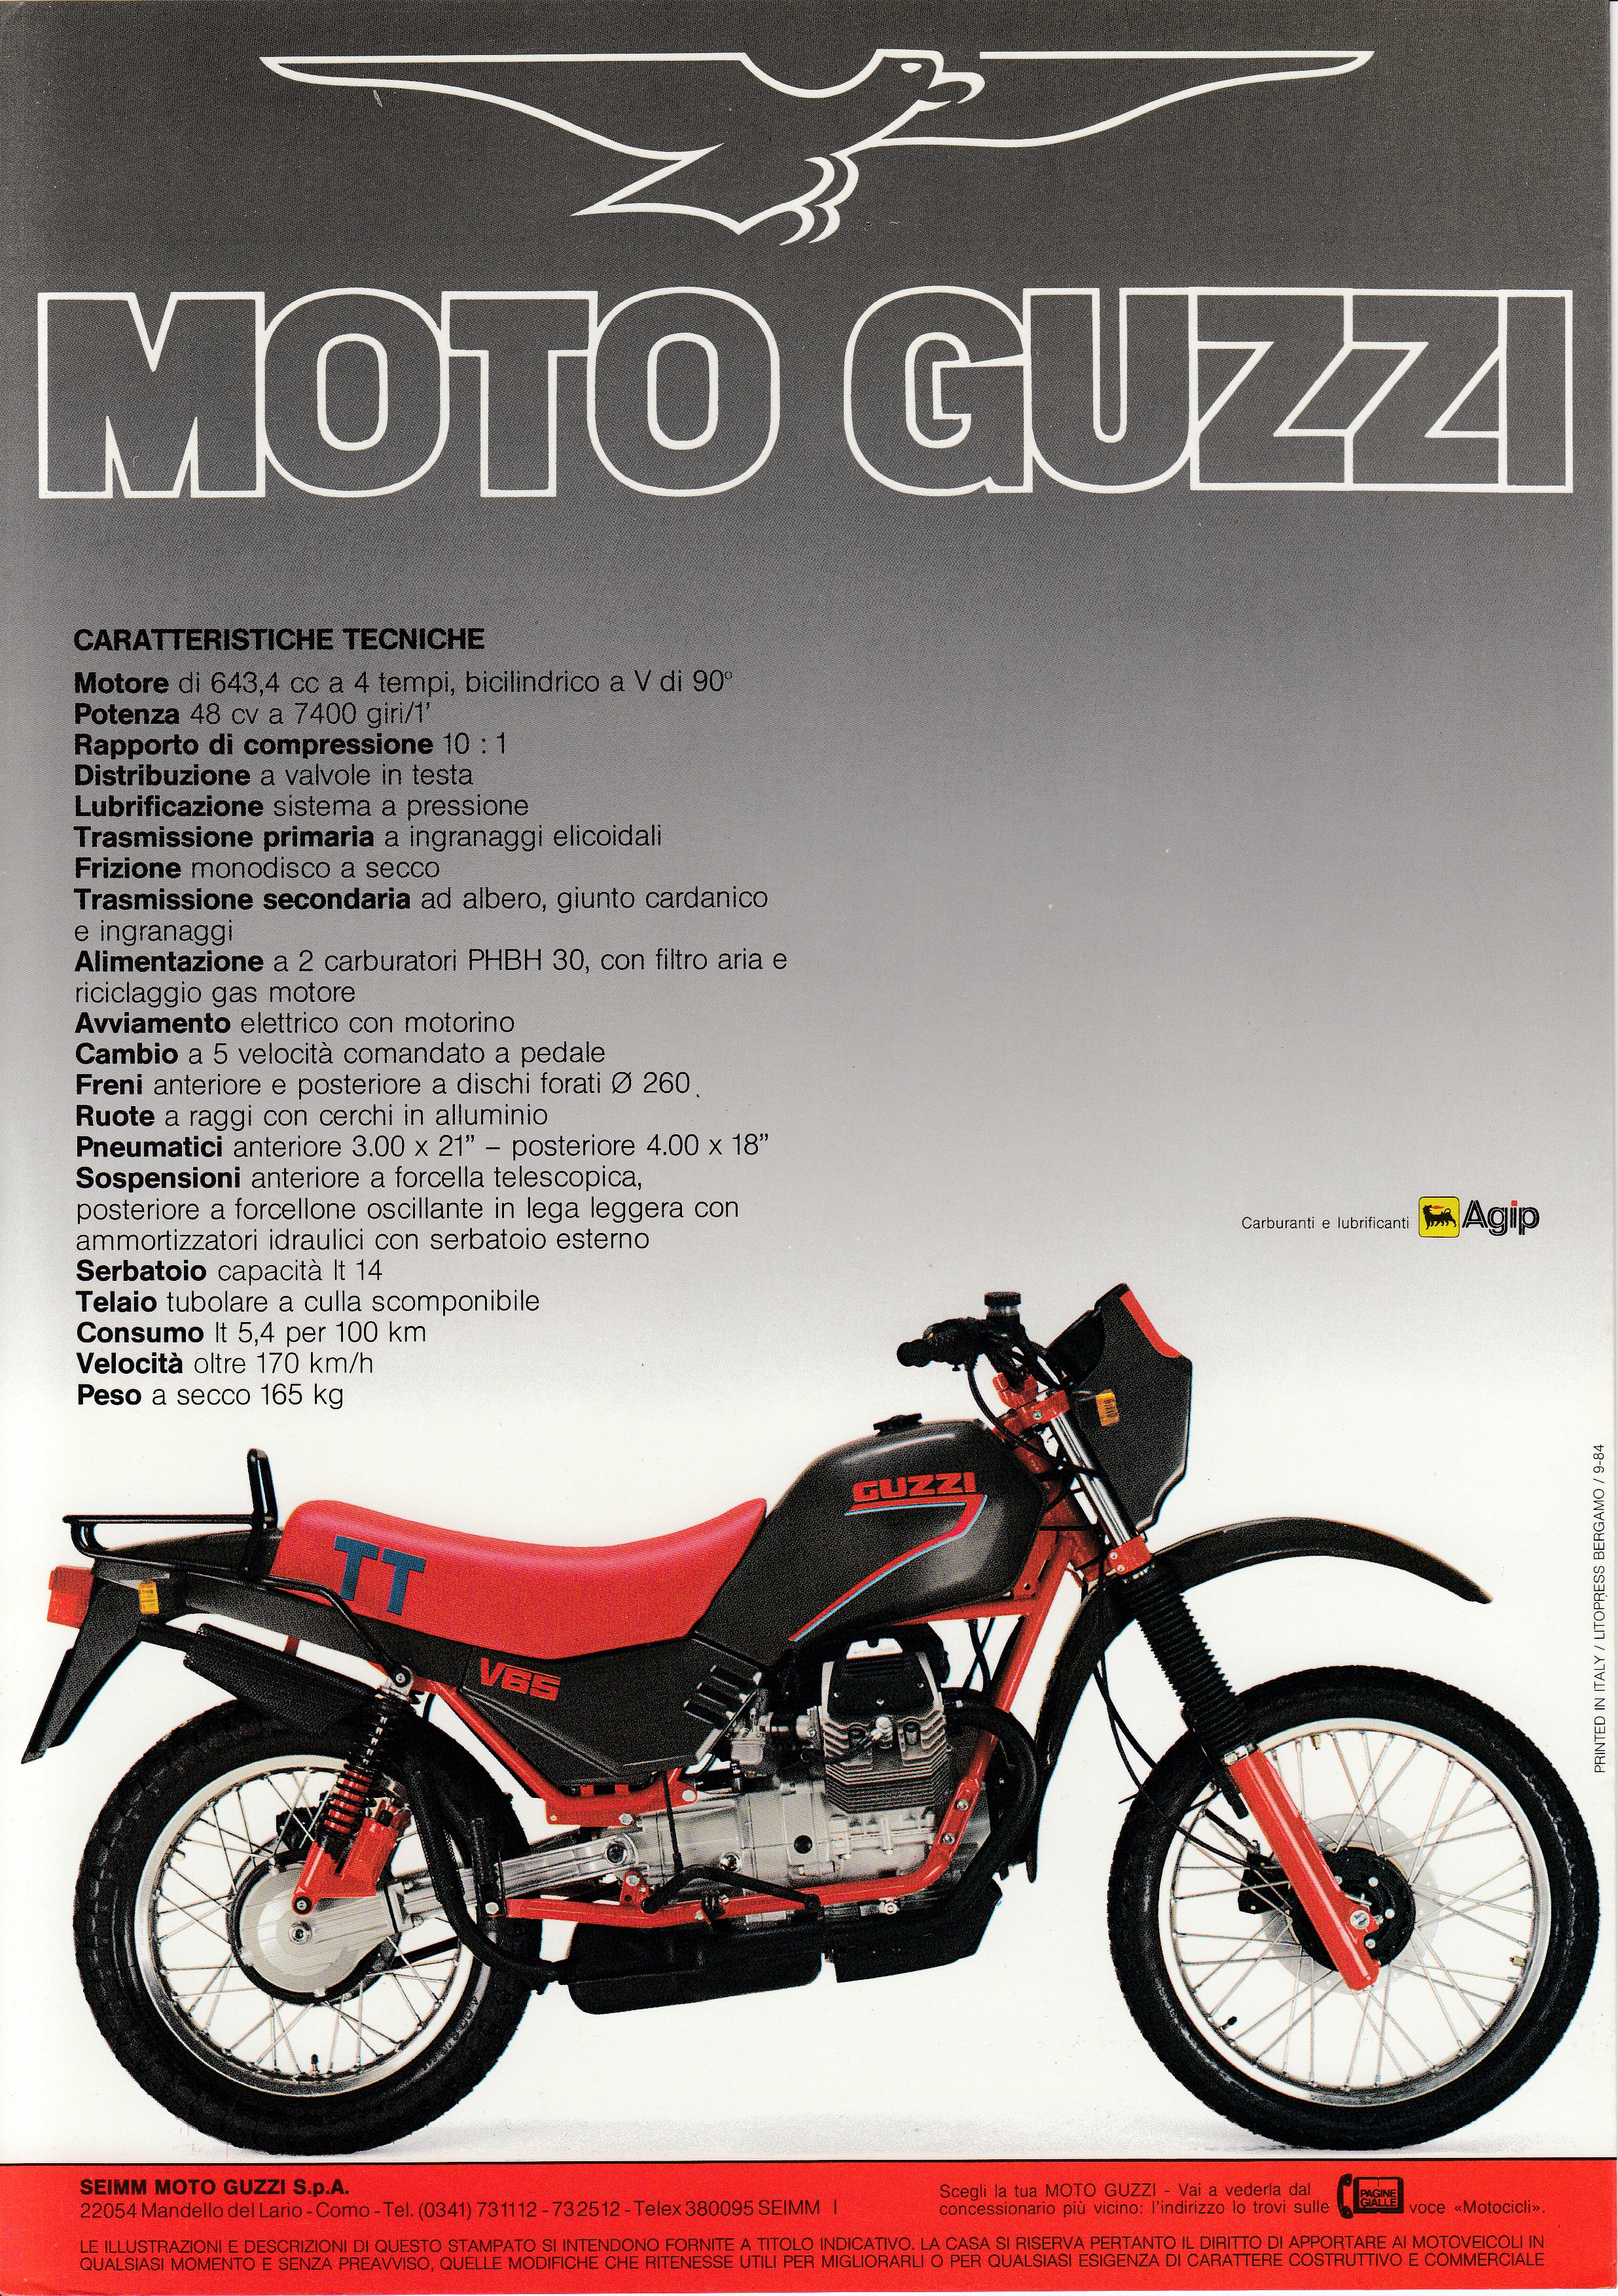 Brochure - Moto Guzzi V65TT (Italian)